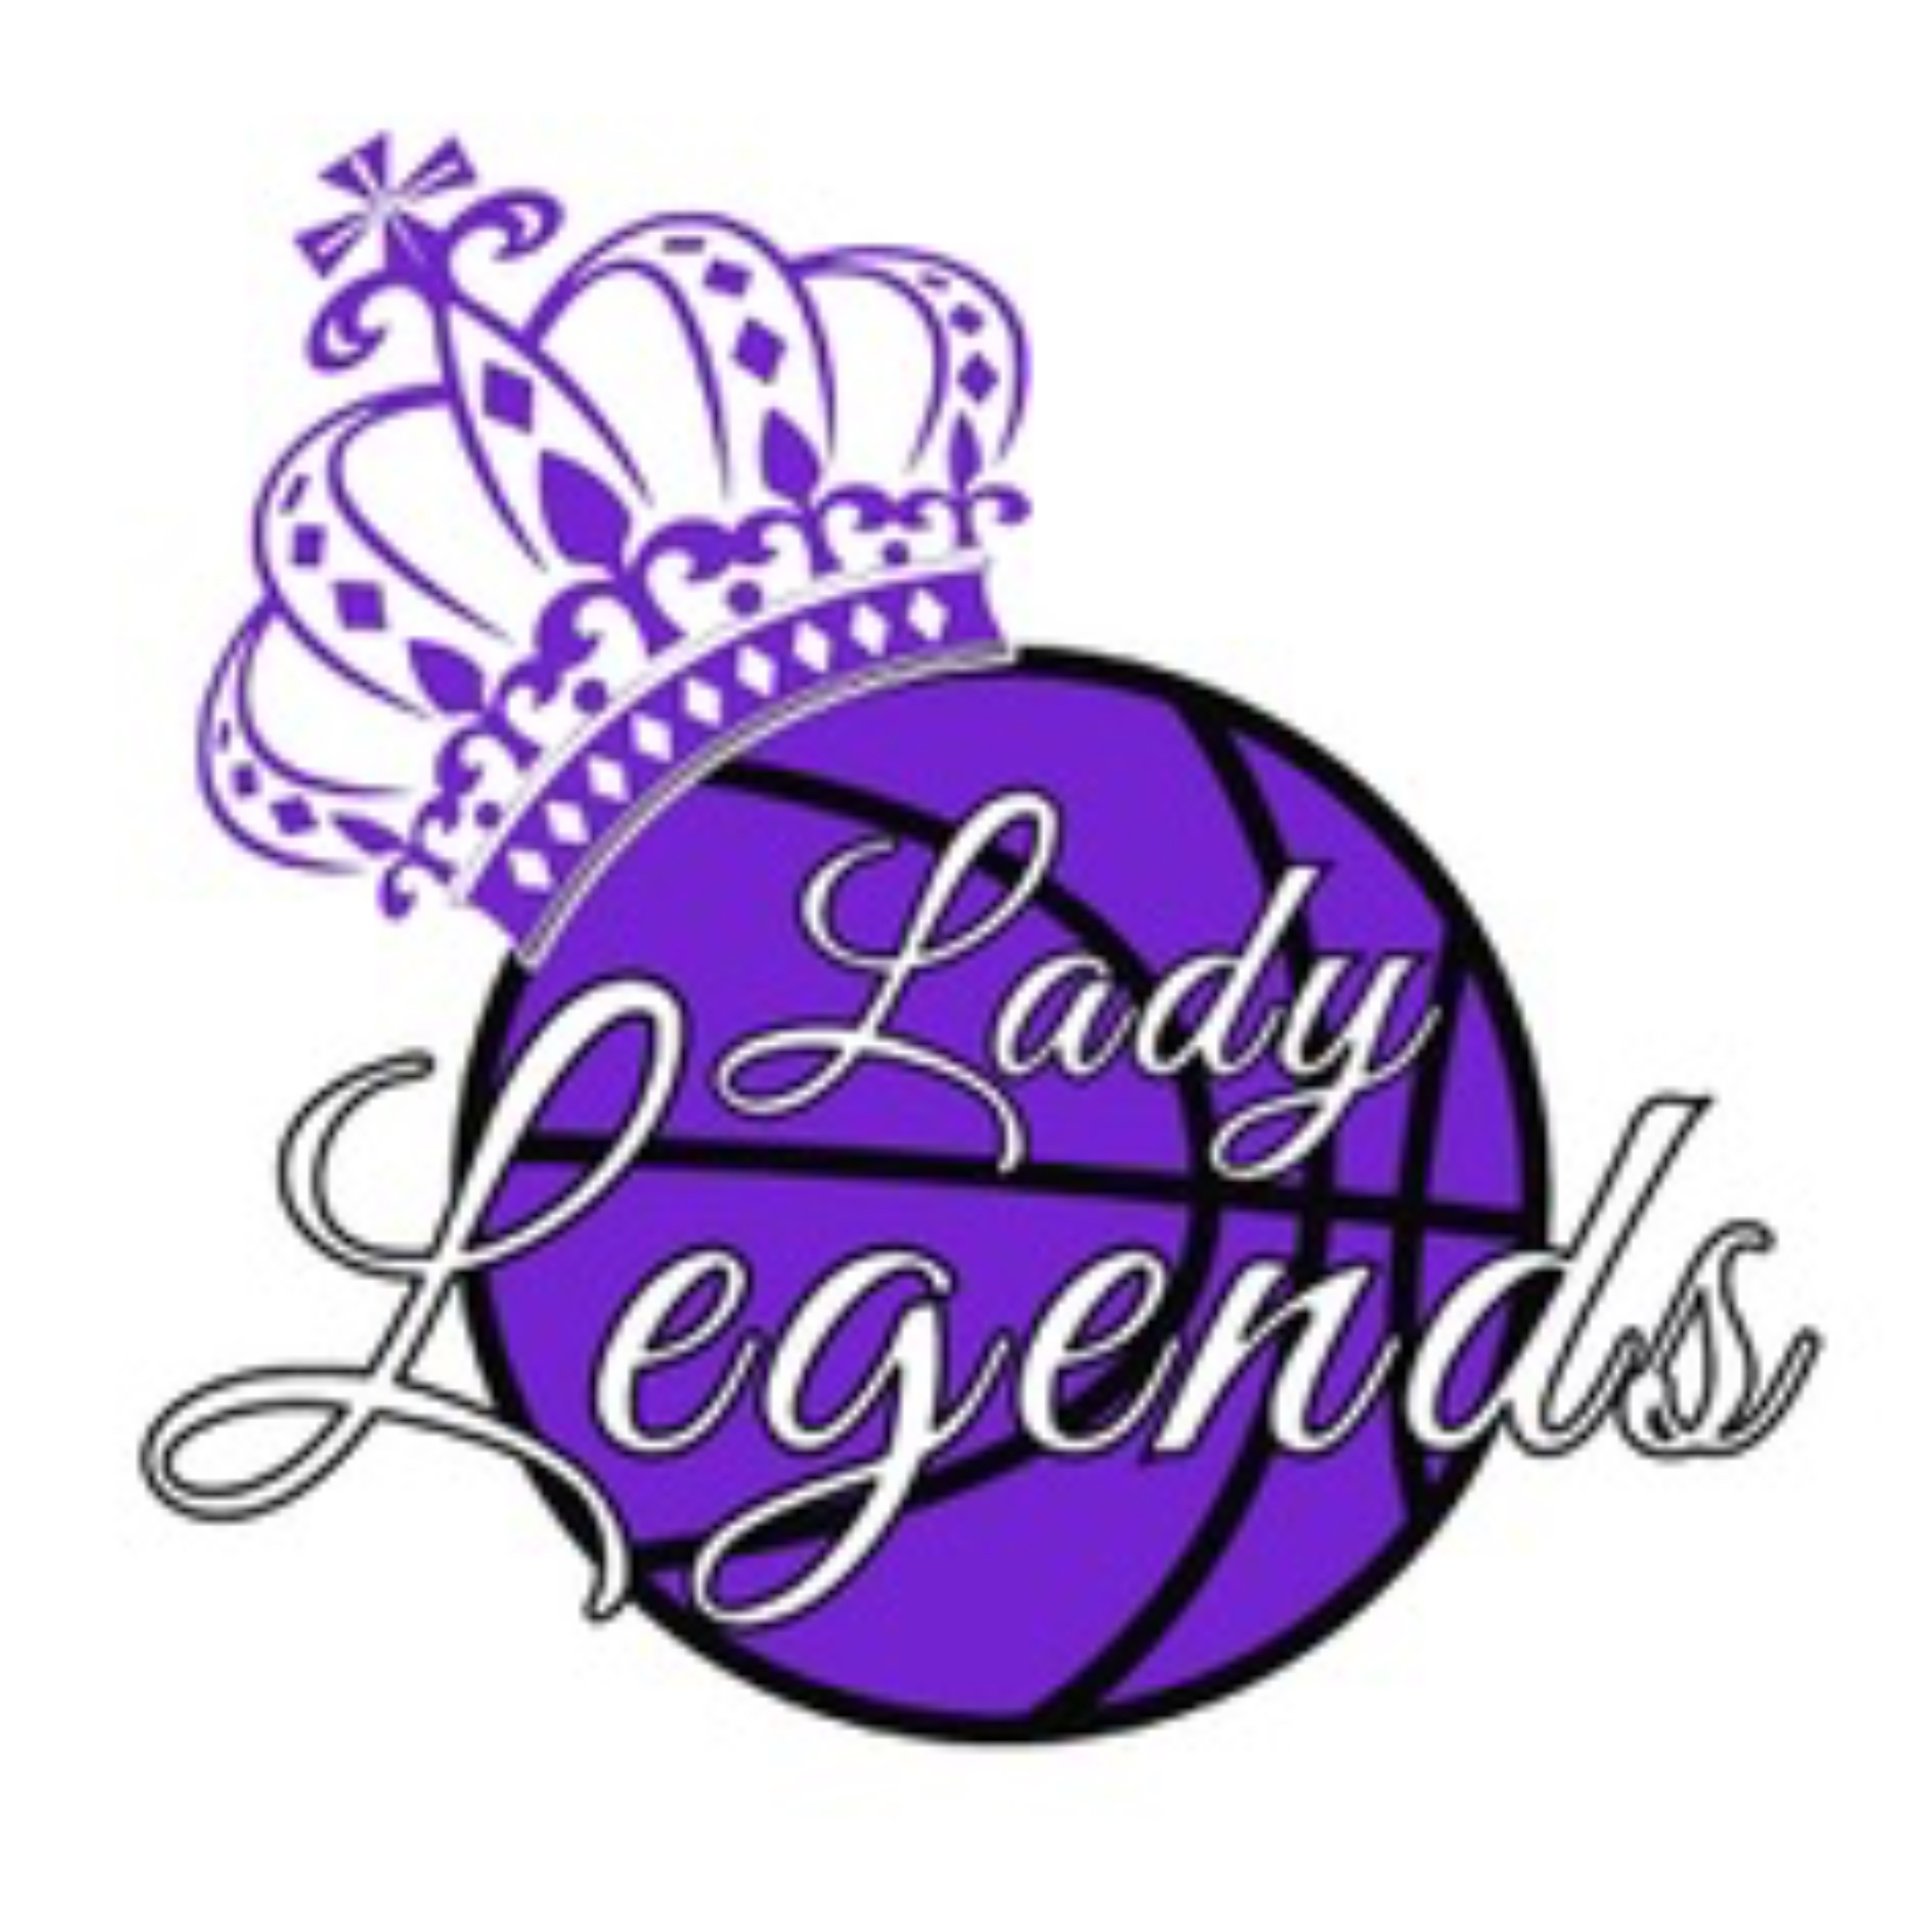 Organization logo for Lady Legends